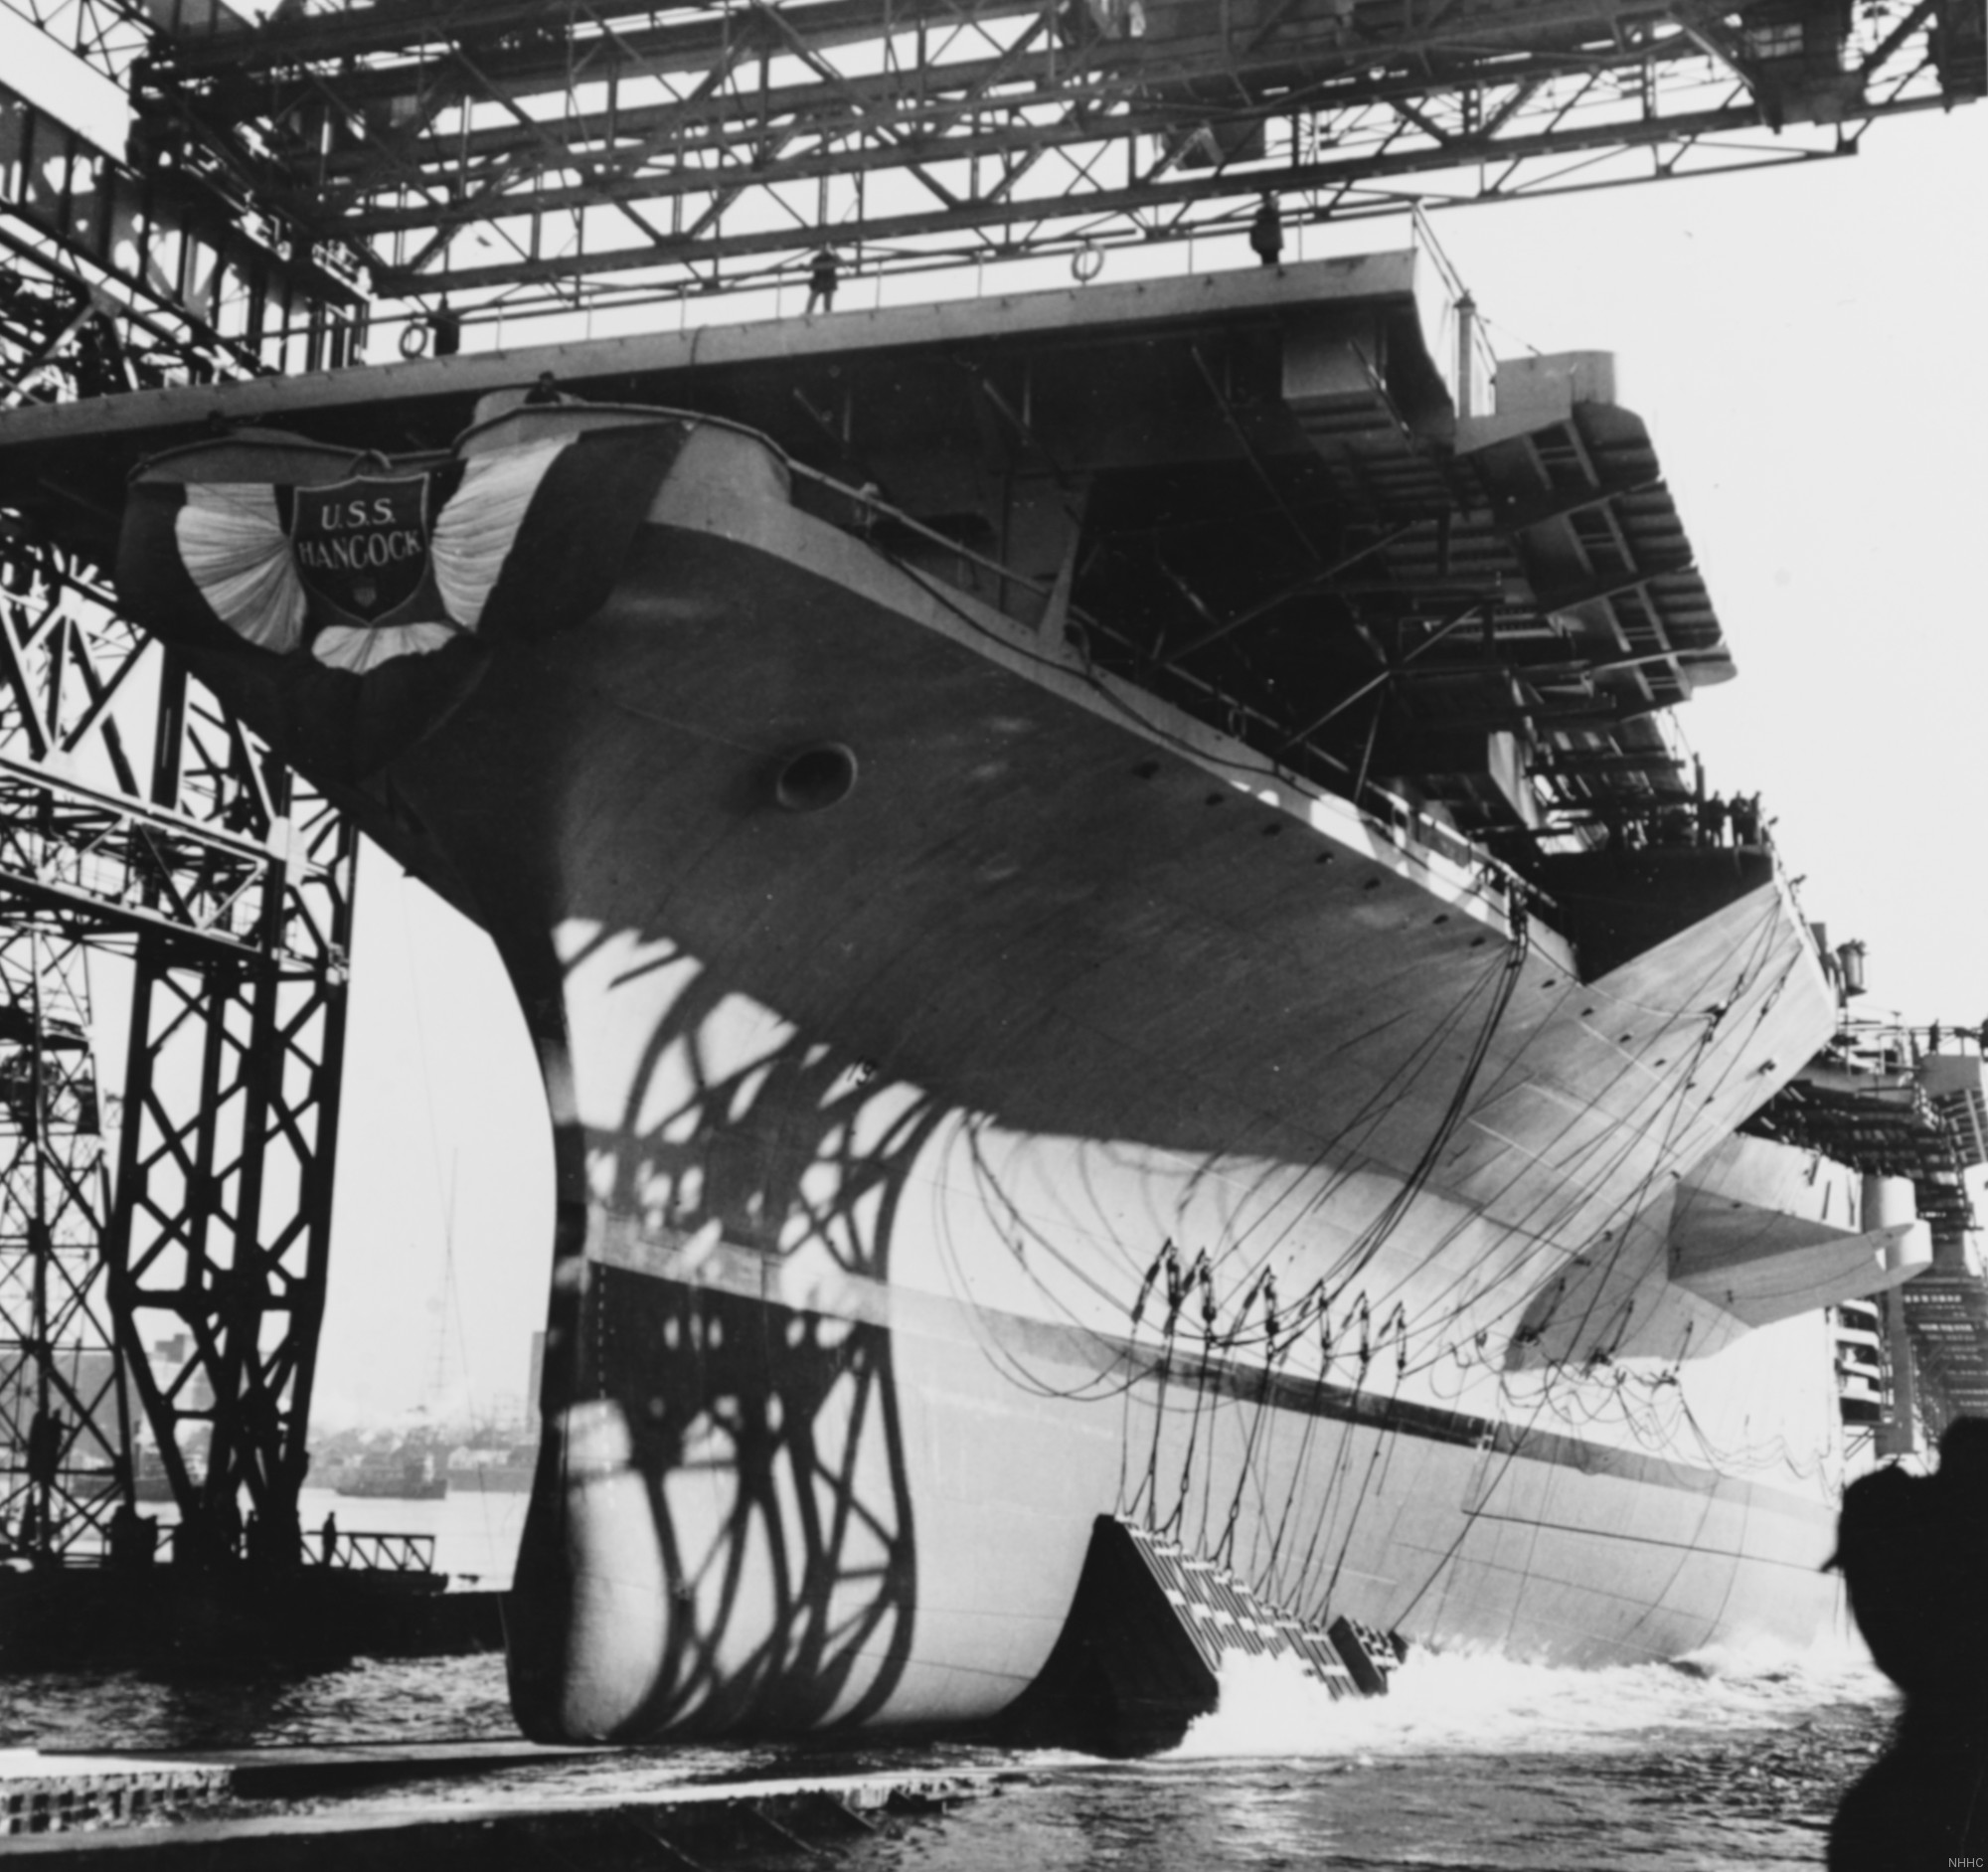 cva-19 uss hancock cv essex class aircraft carrier 42 launching bethlehem steel company quincy massachusetts